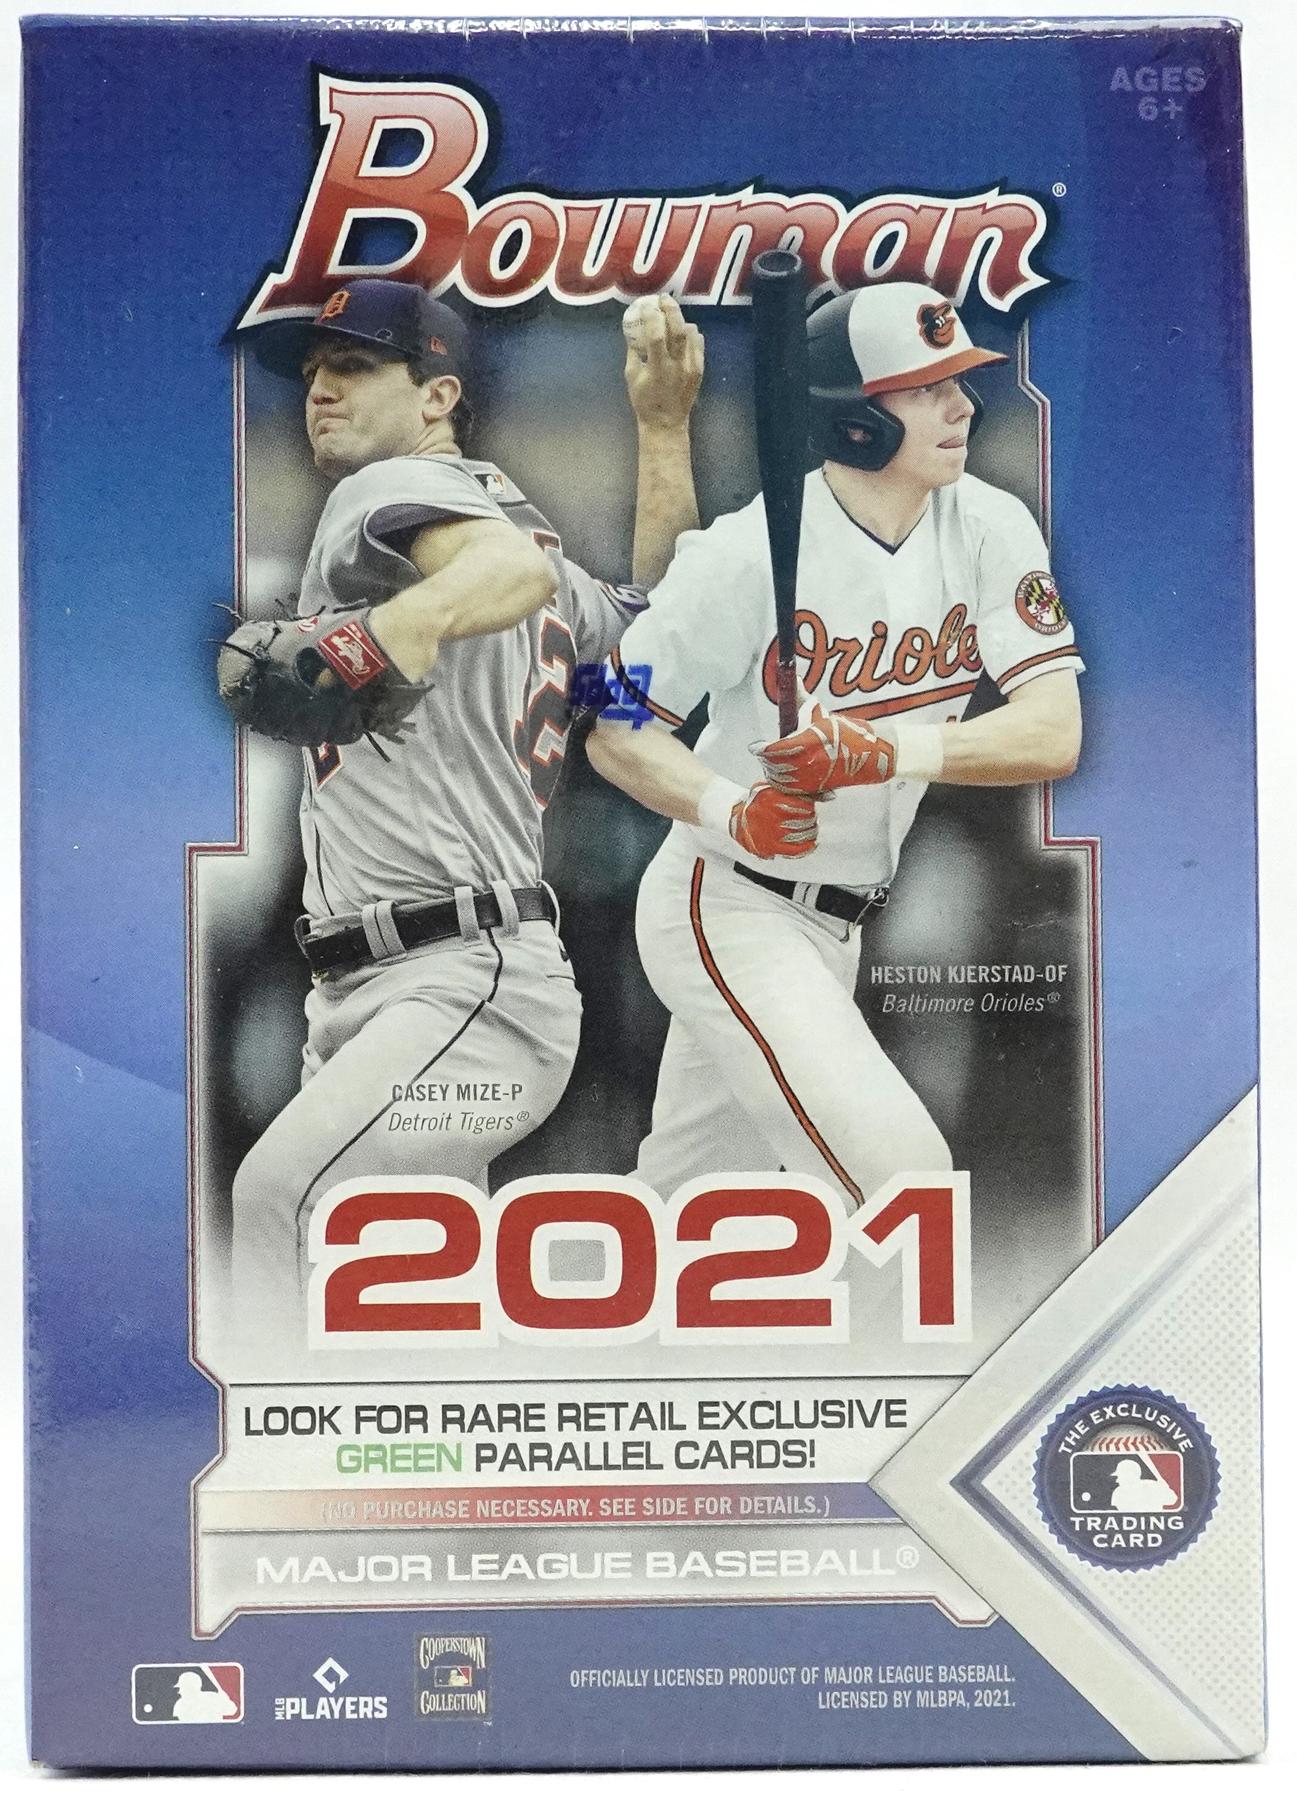 2021 ALEC BOHM (7) card rookie lot - Includes Bowman Silver Refractor